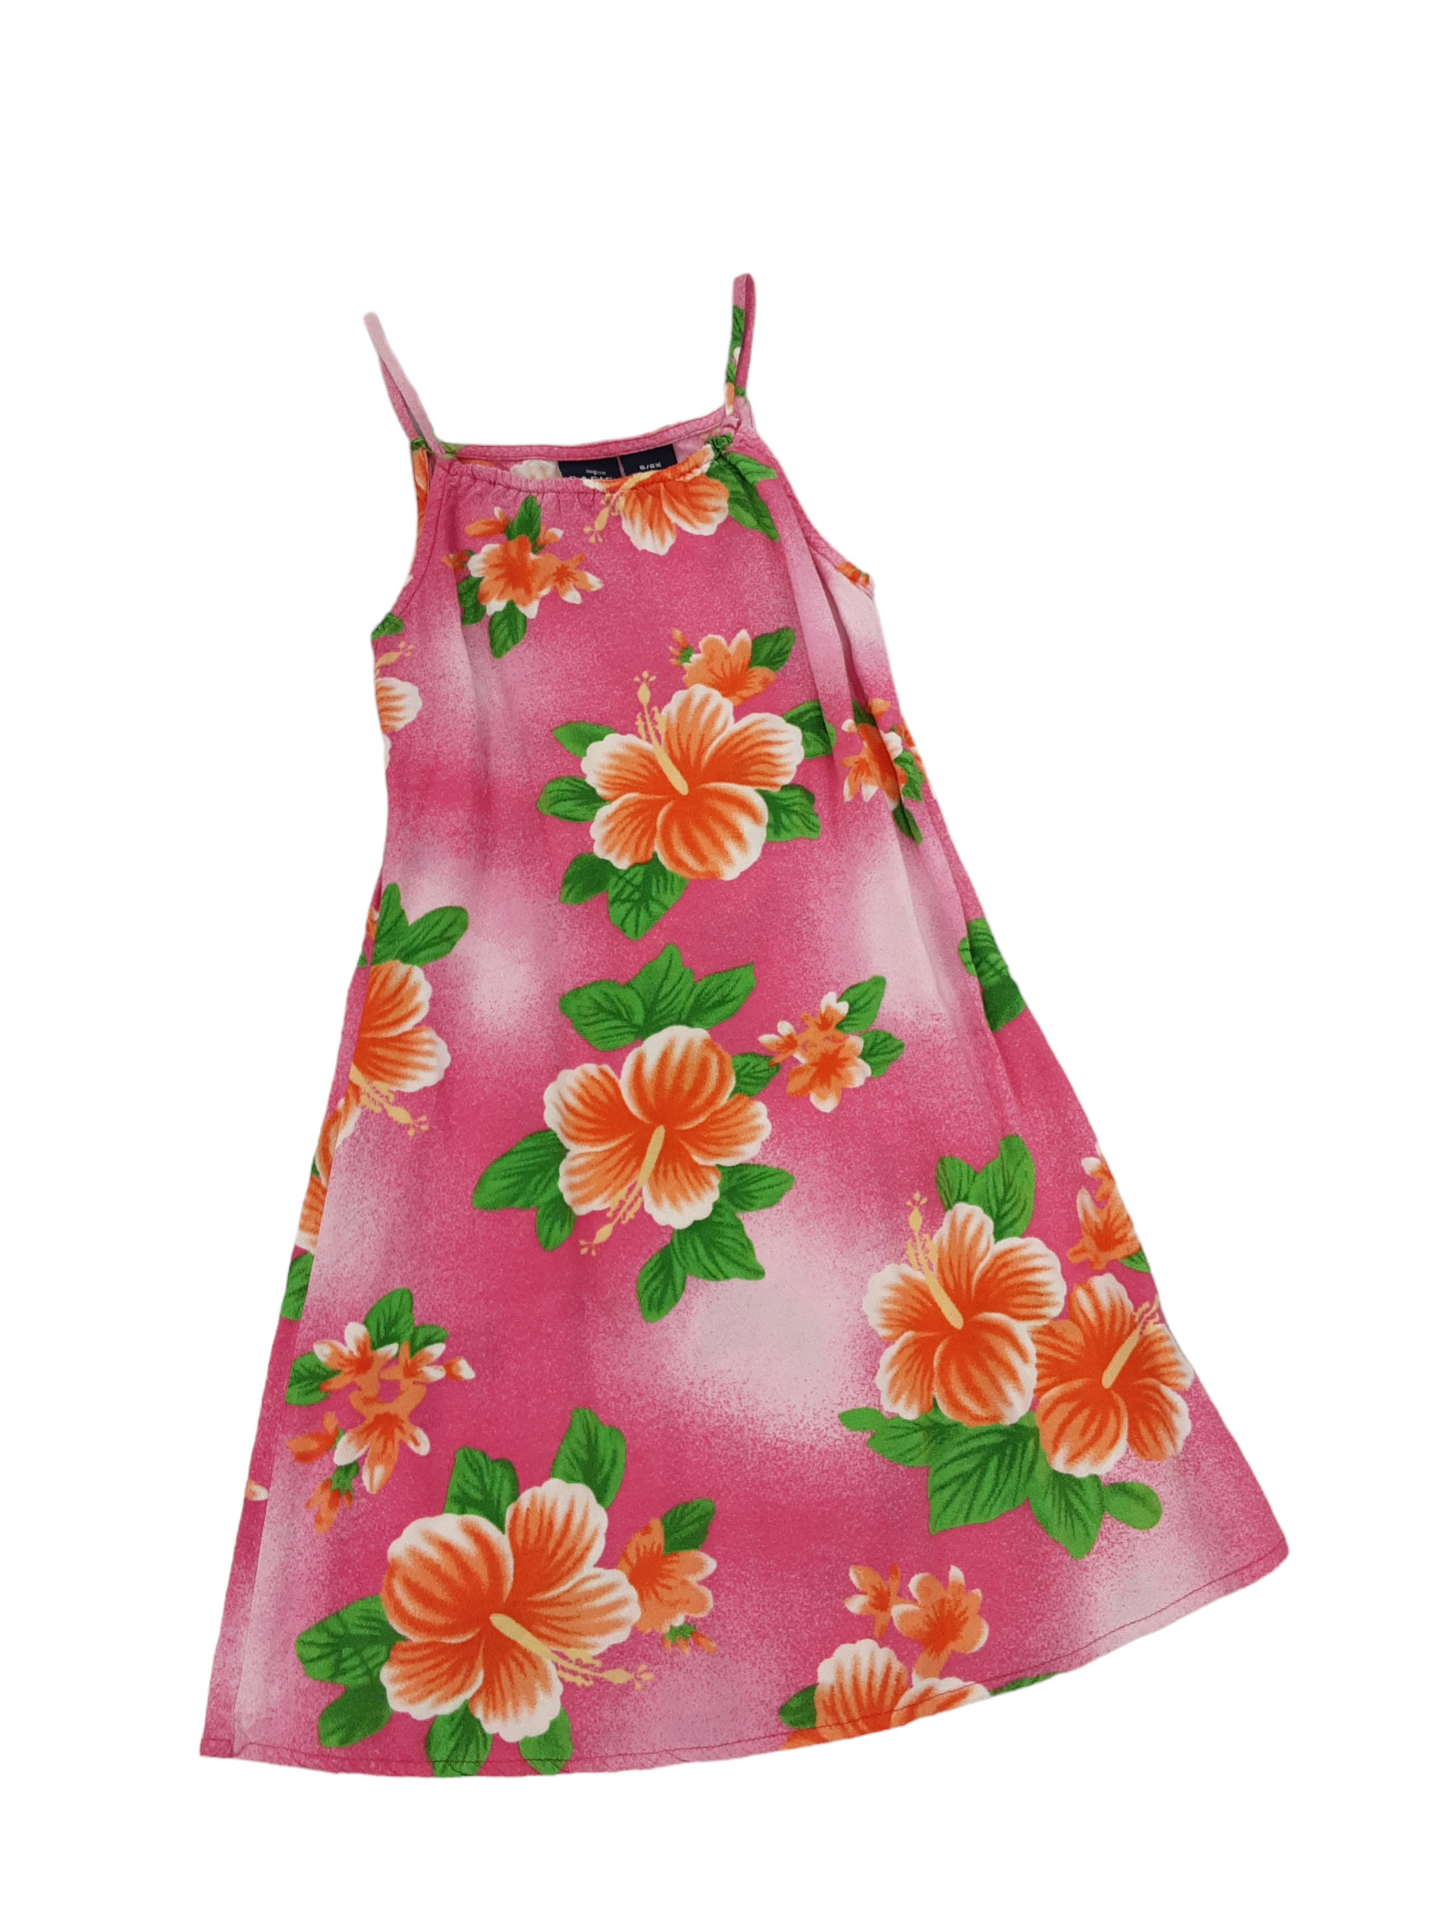 Size 6/6x soft floral dress